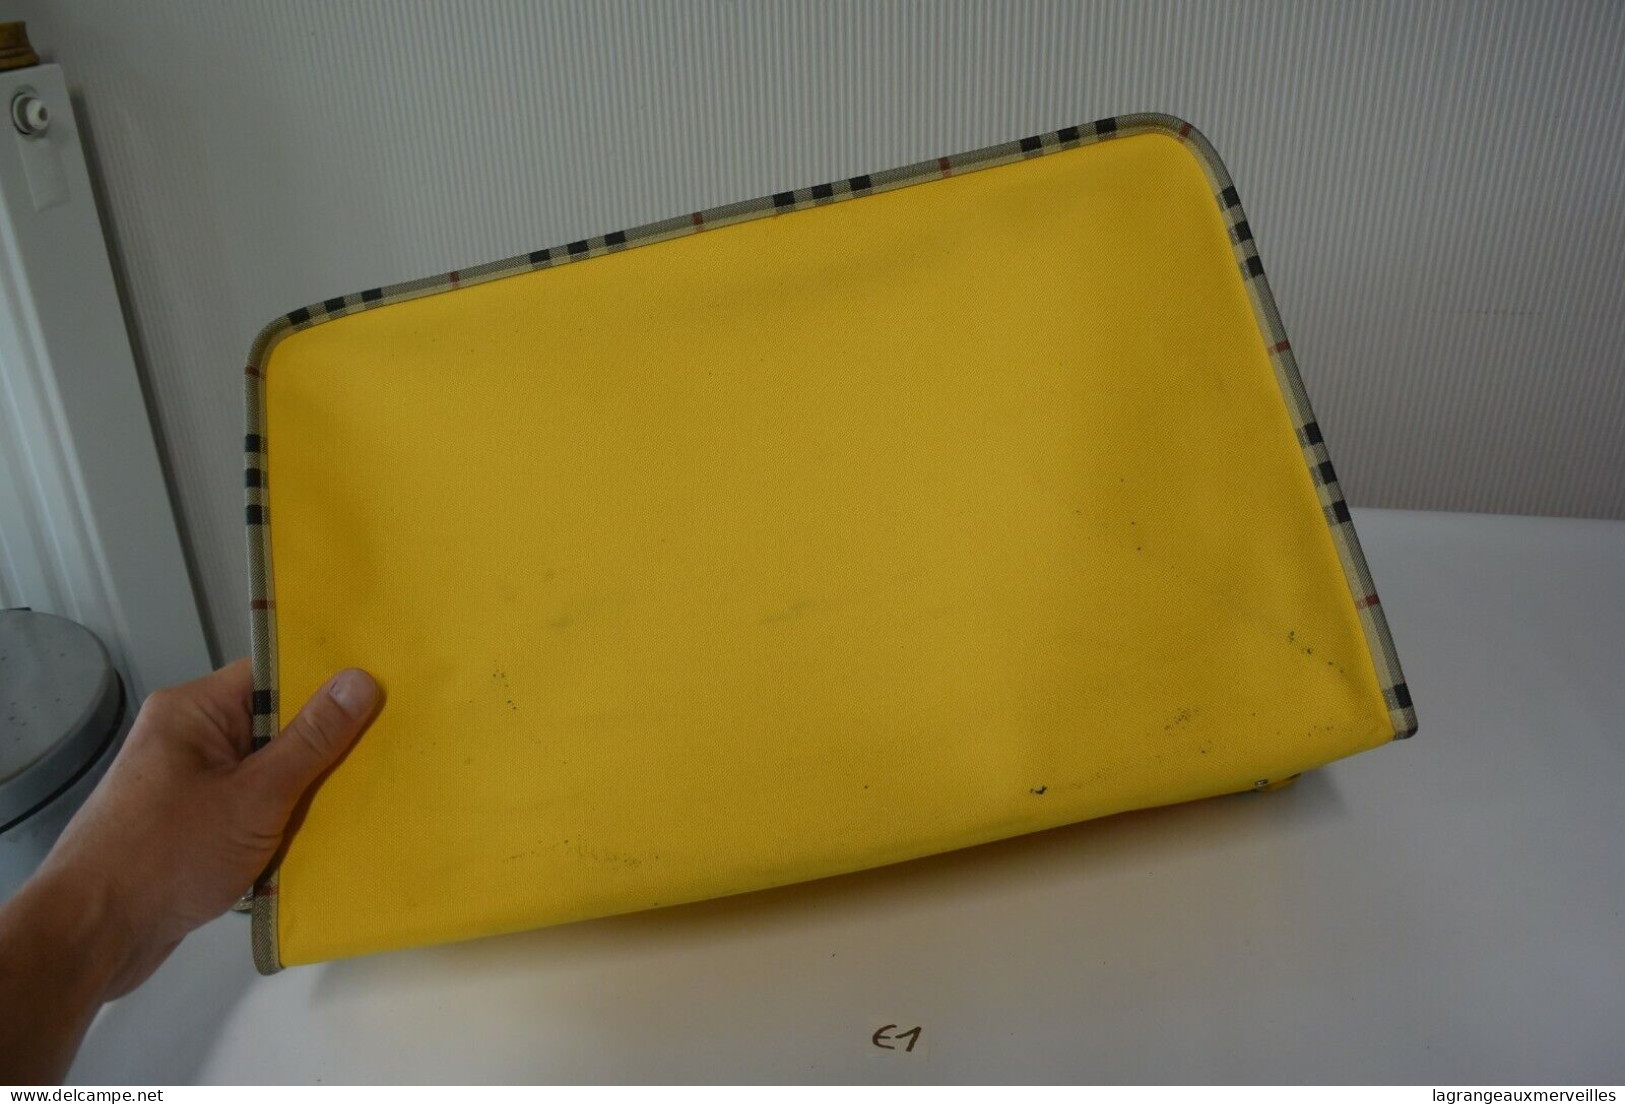 E1 Ancienne valise jaune - Burberrys Fragnance - Rare